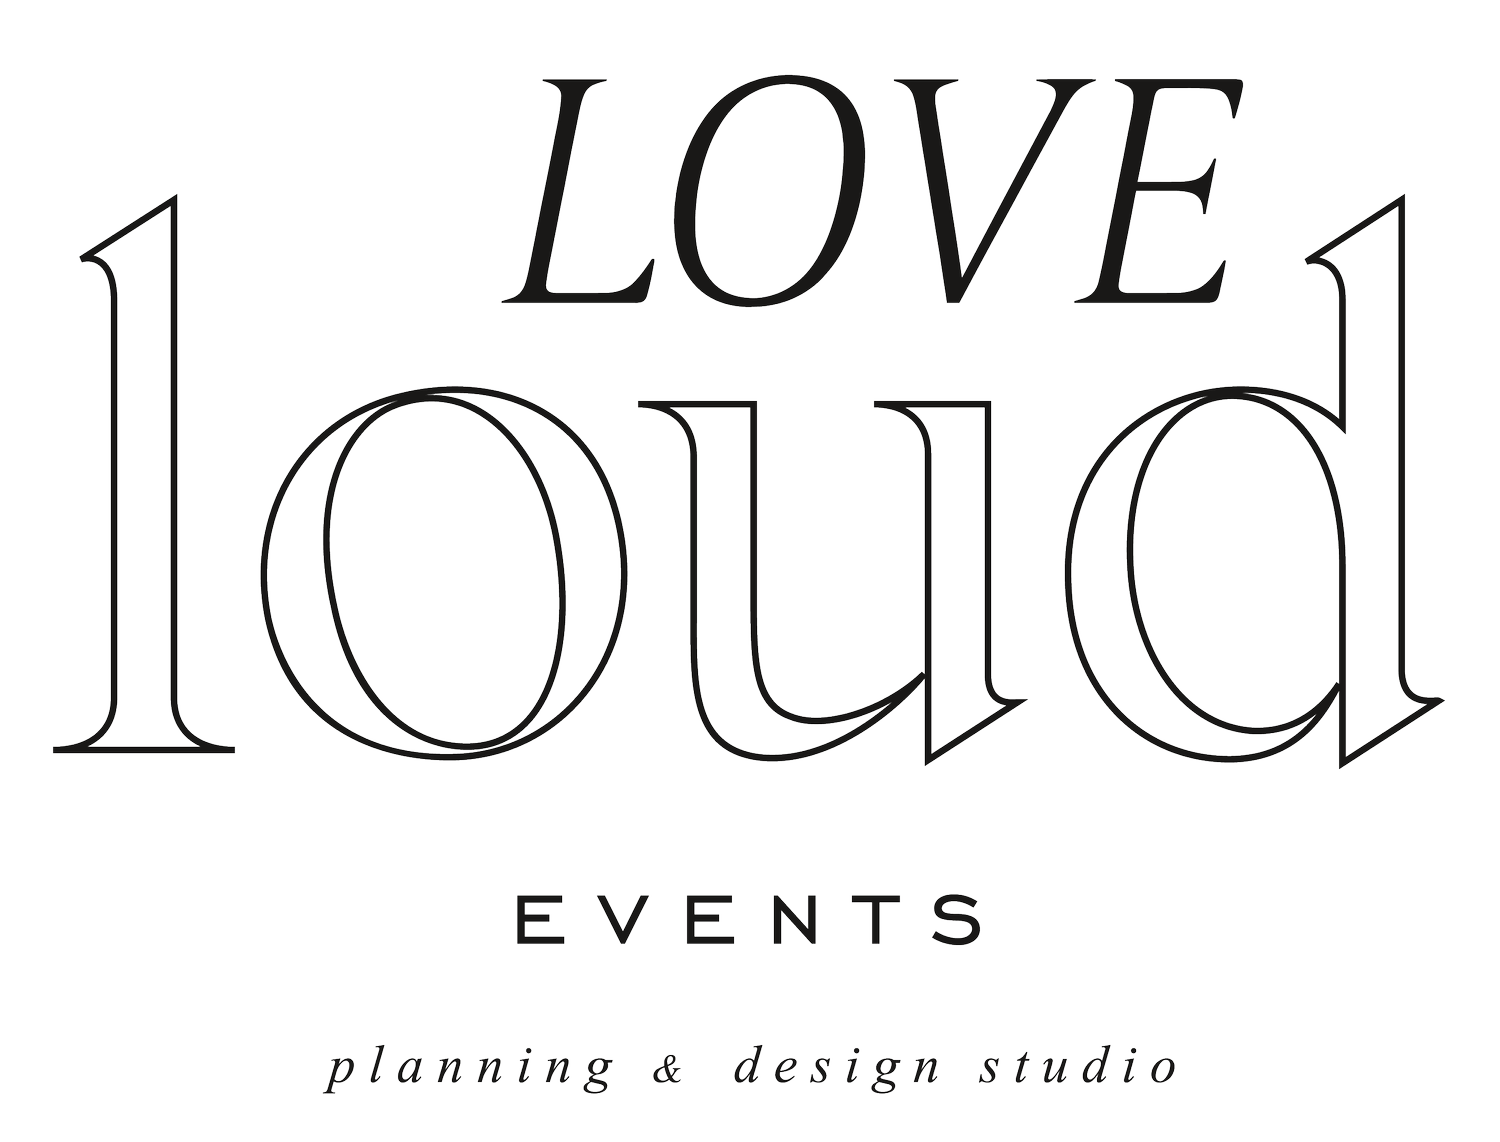 Love Loud Events